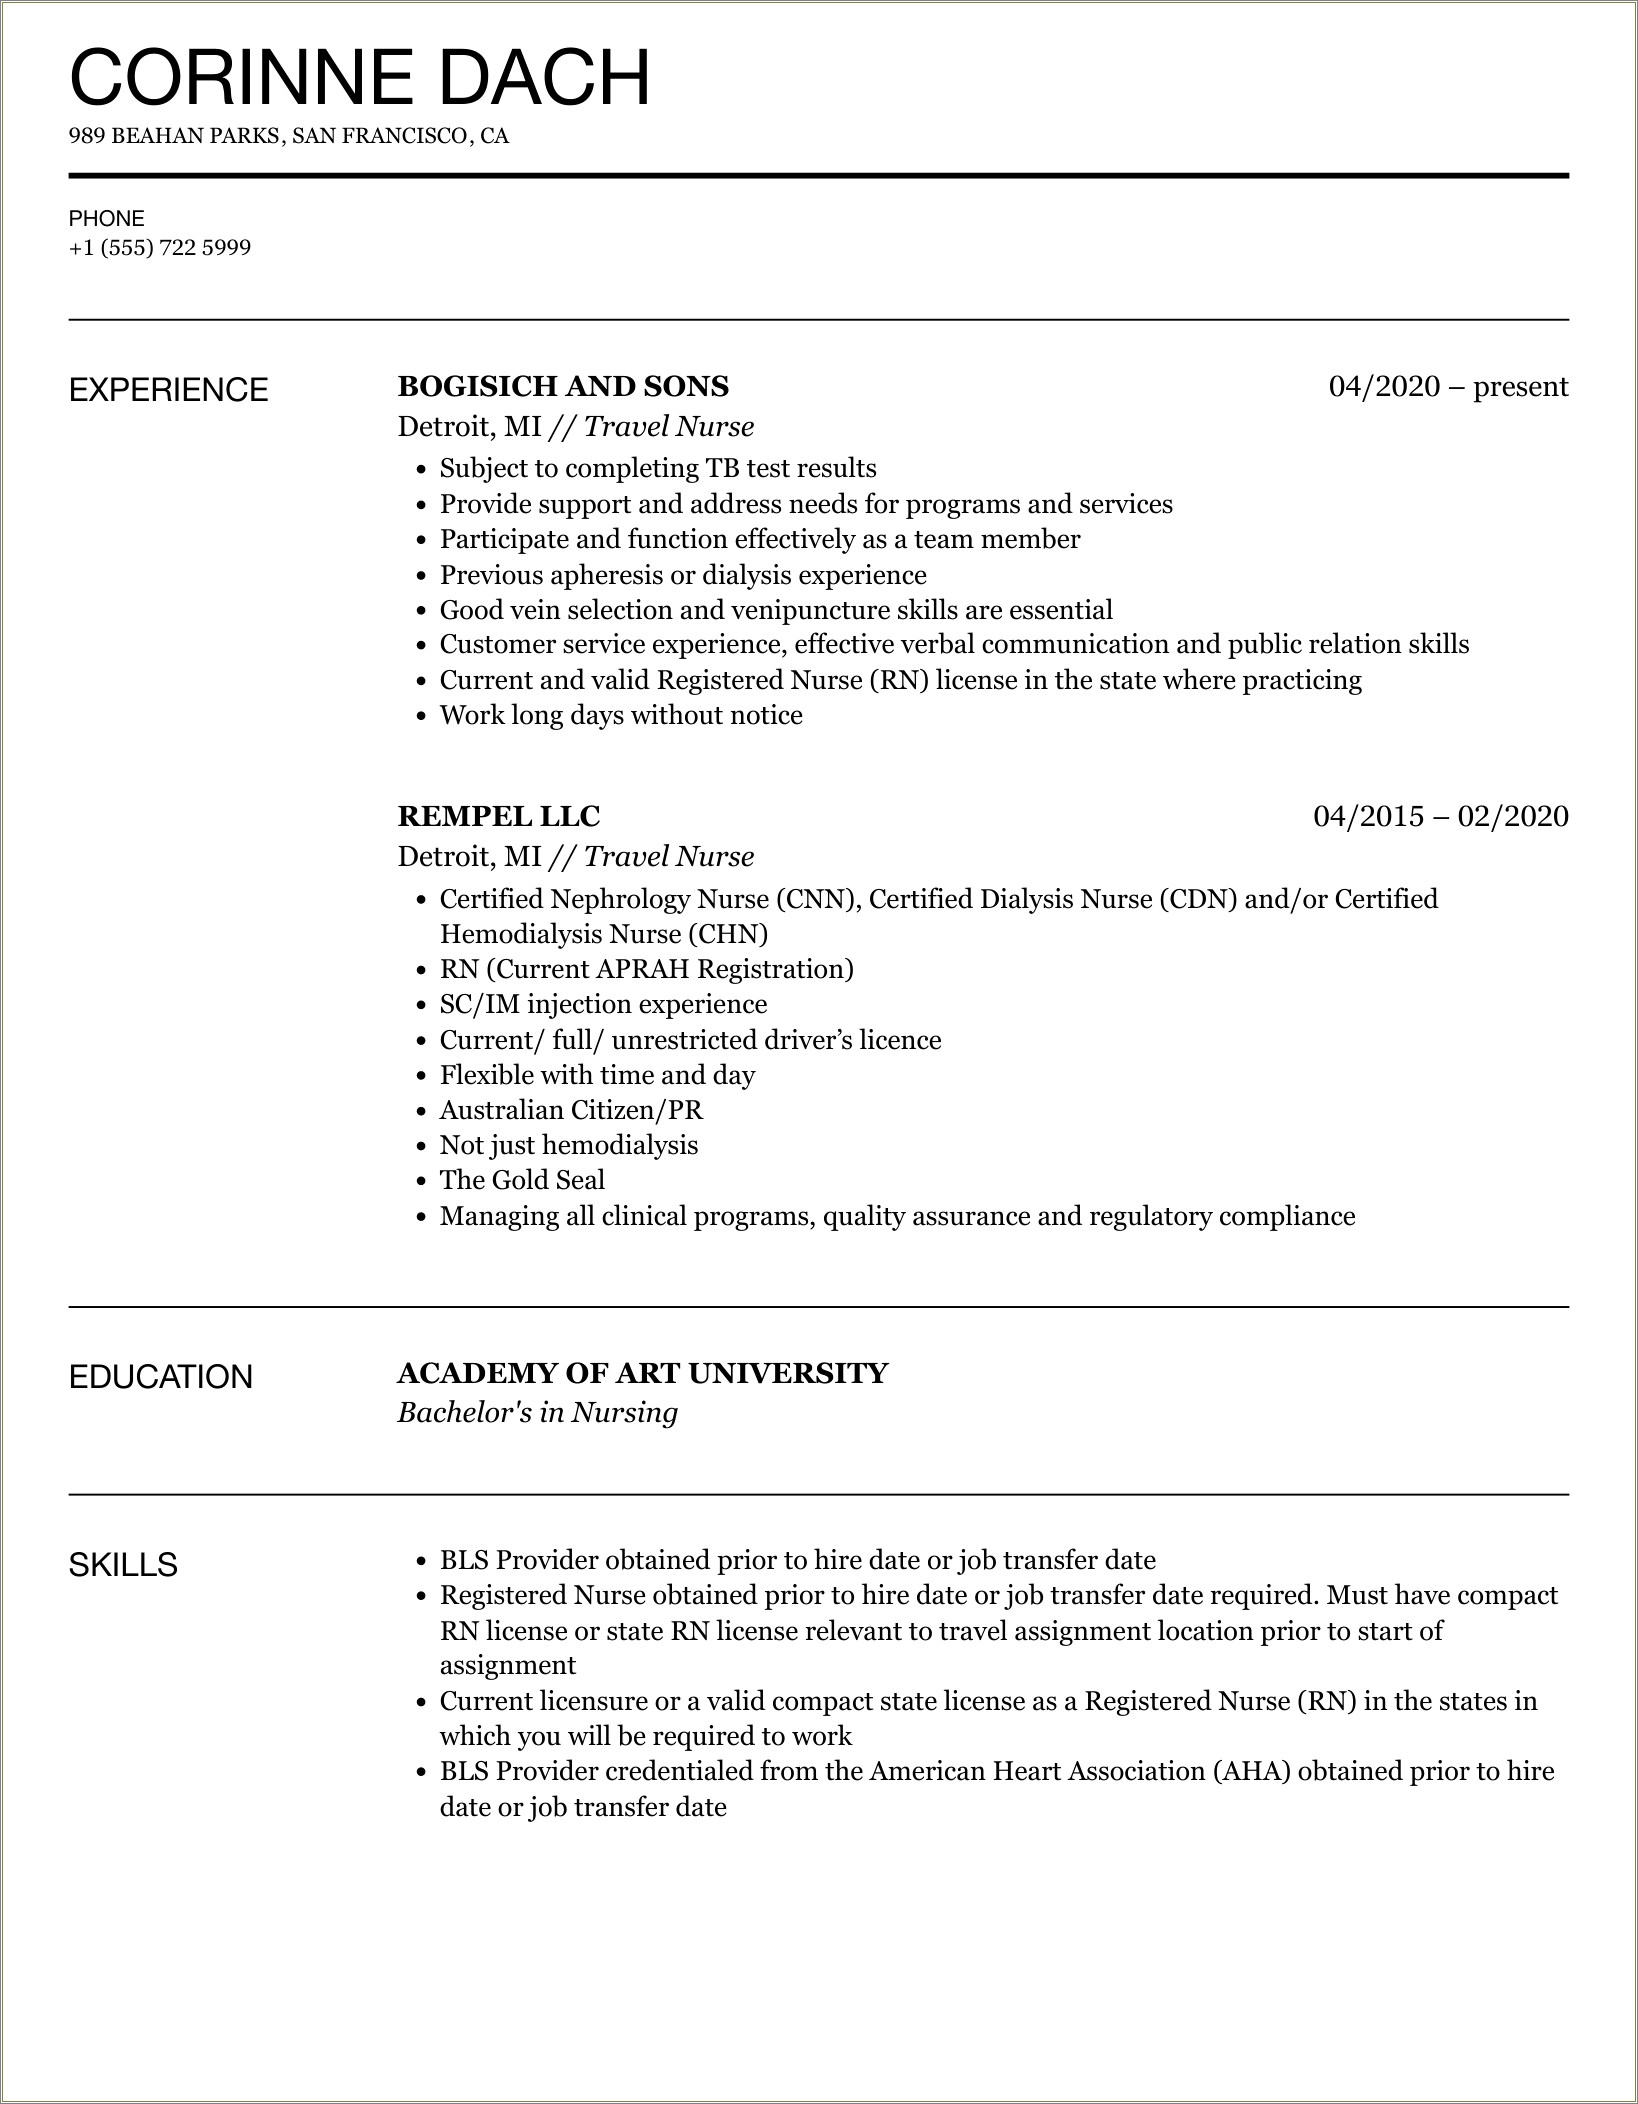 Resume For Job Description For Traveling Nursing